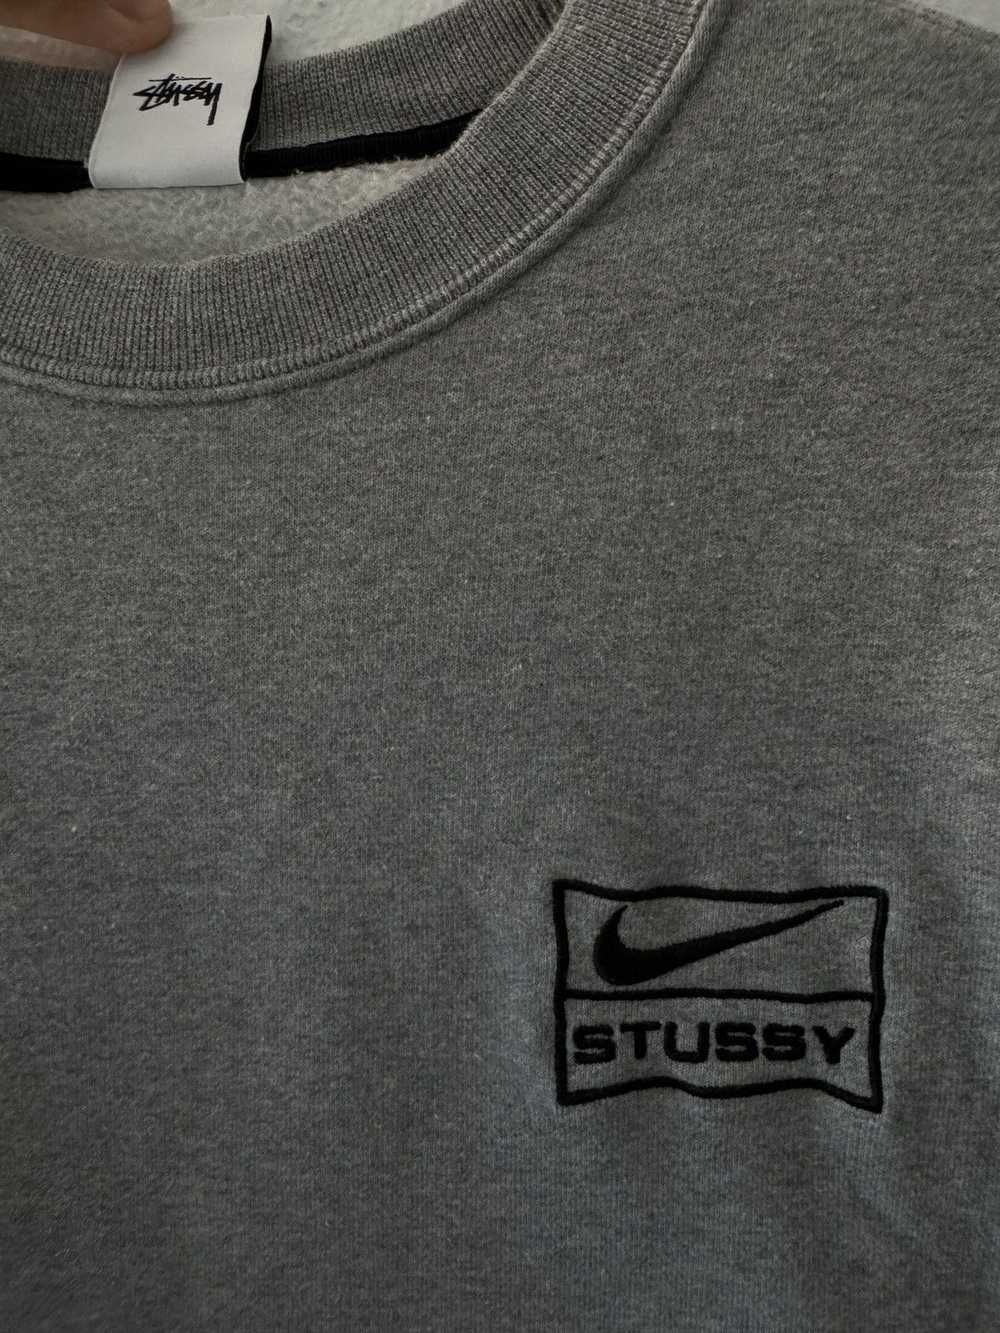 Nike × Stussy Nike Stussy Crewneck Sweatshirt - image 3